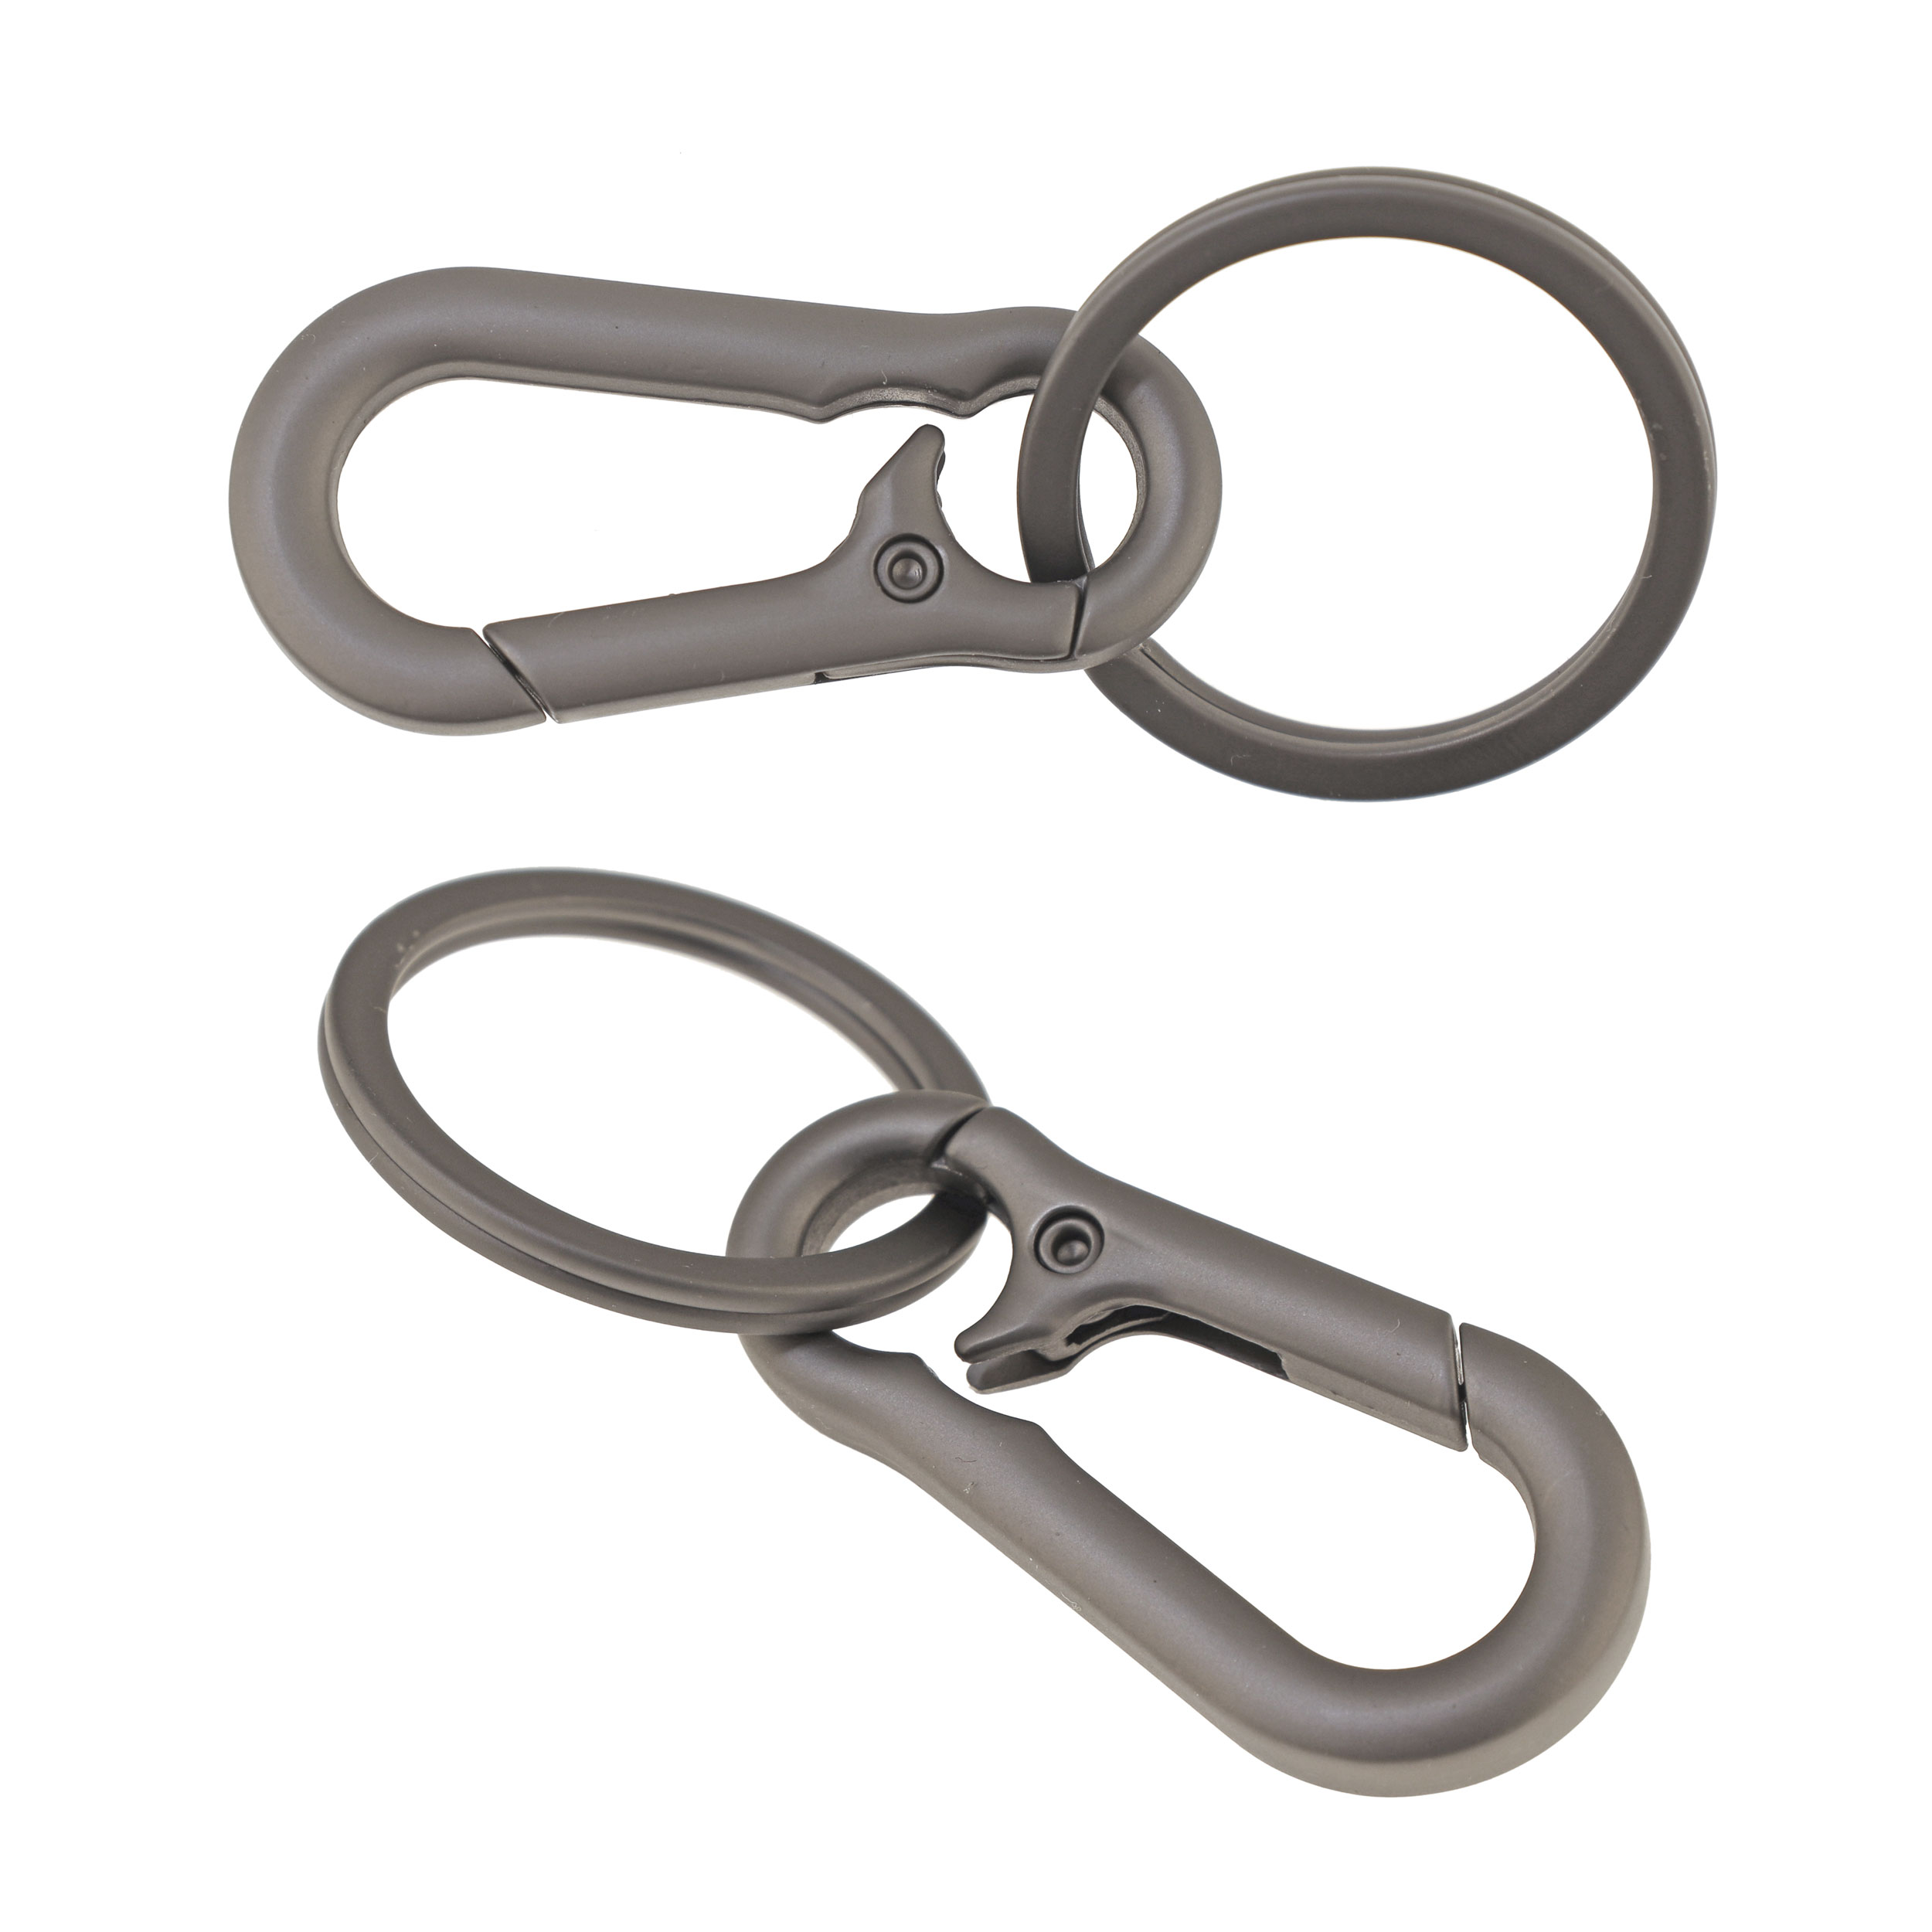 Swivel hook; swivel latch; swivel ring; snap hook, key clasp, 45 x 23 with strong  key ring, Key rings